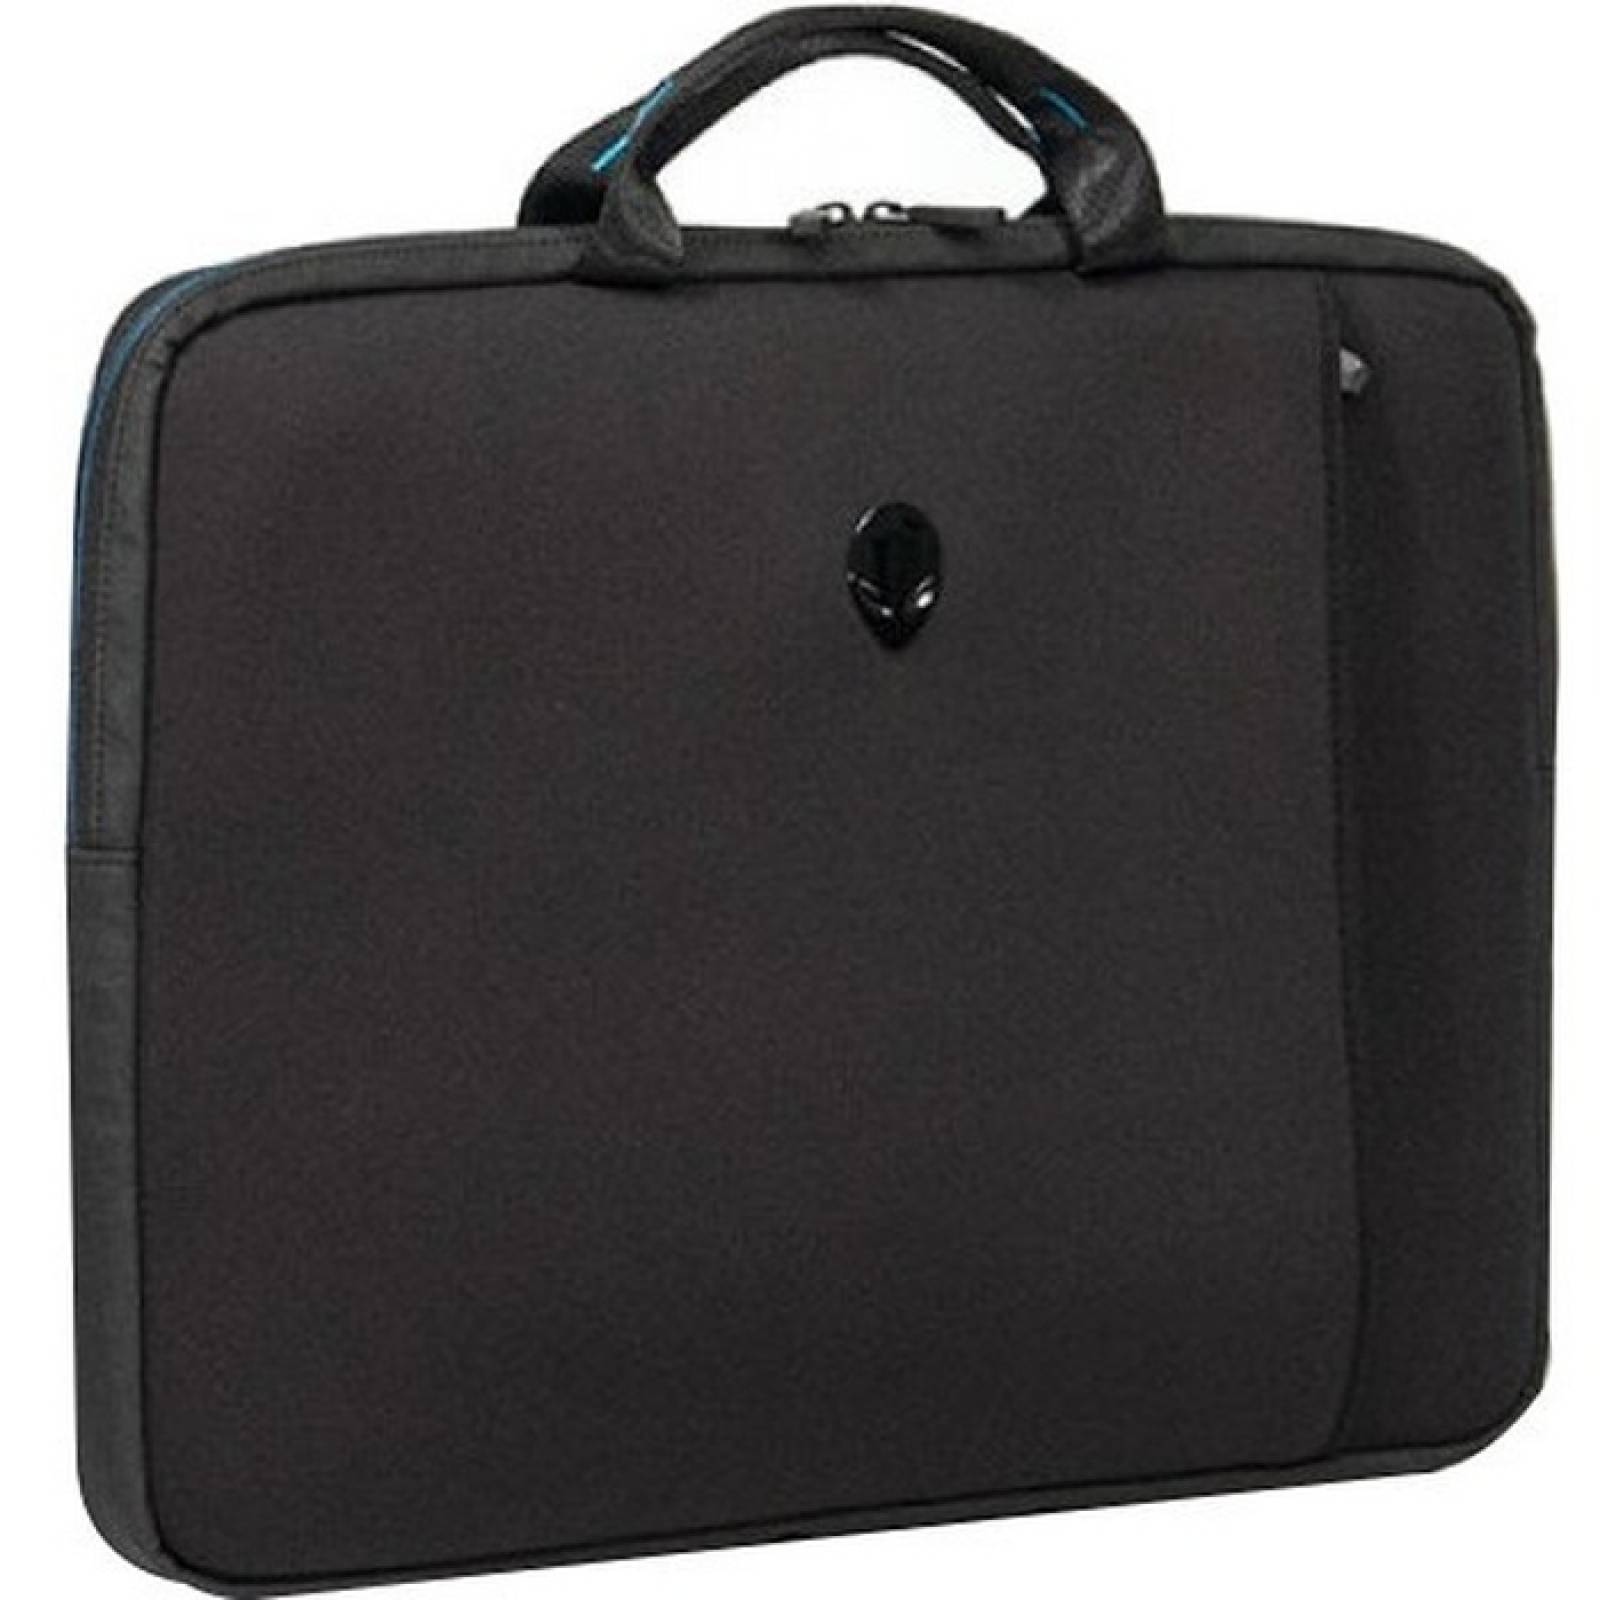 Mobile Edge Alienware Vindicator Carrying Case (Sleeve) for 173 Notebook  Teal Black